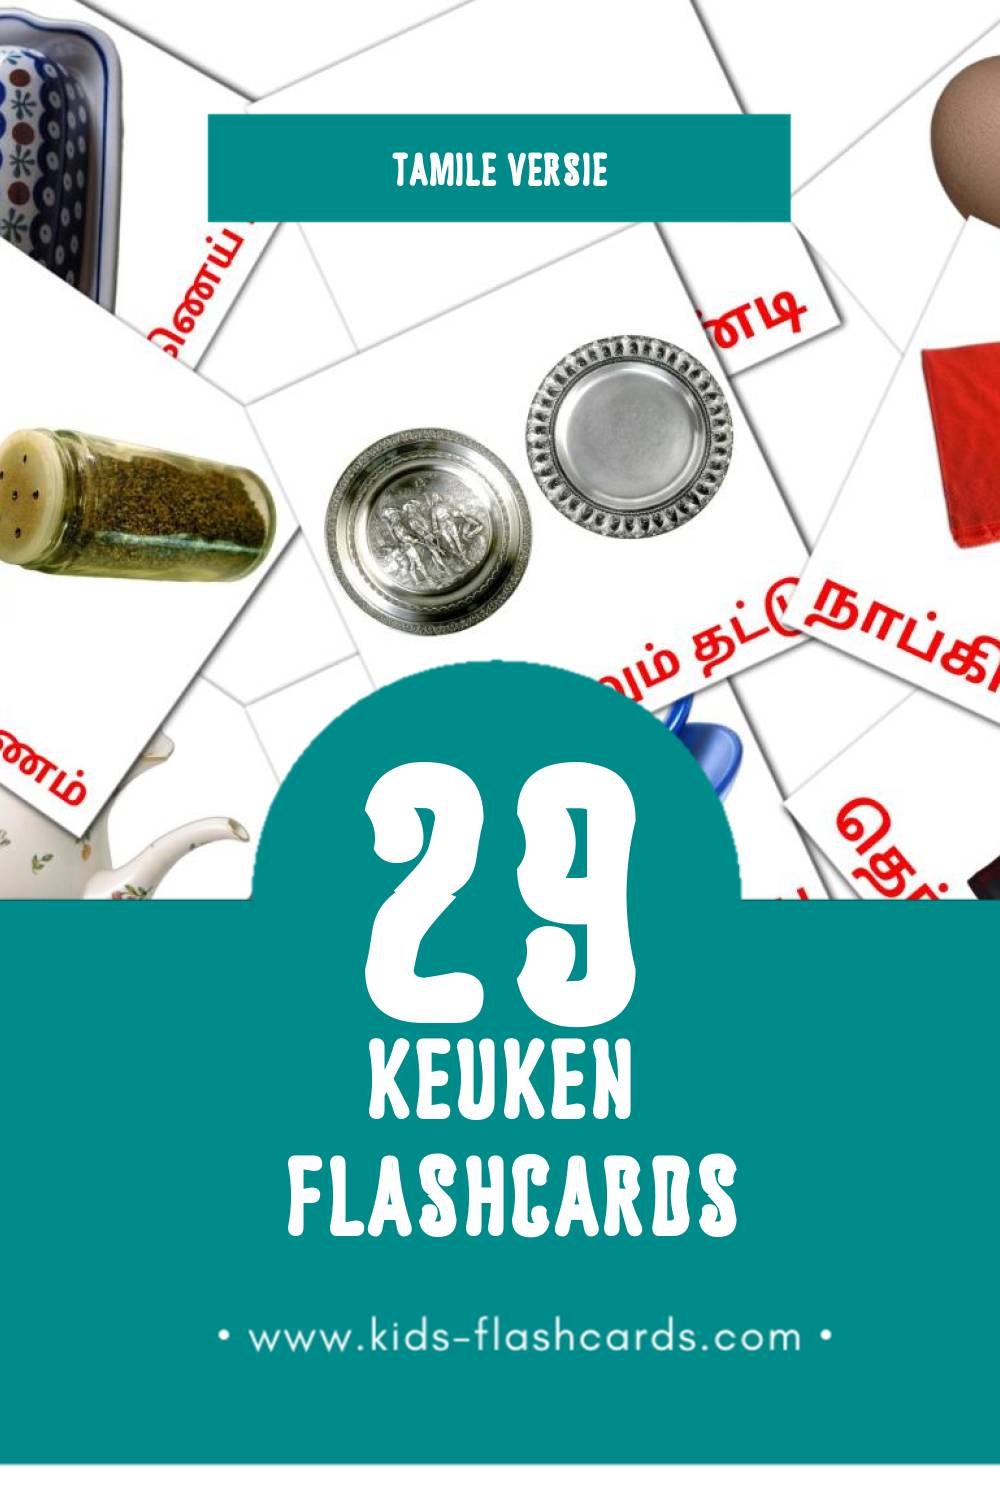 Visuele சமையலறை Flashcards voor Kleuters (29 kaarten in het Tamil)